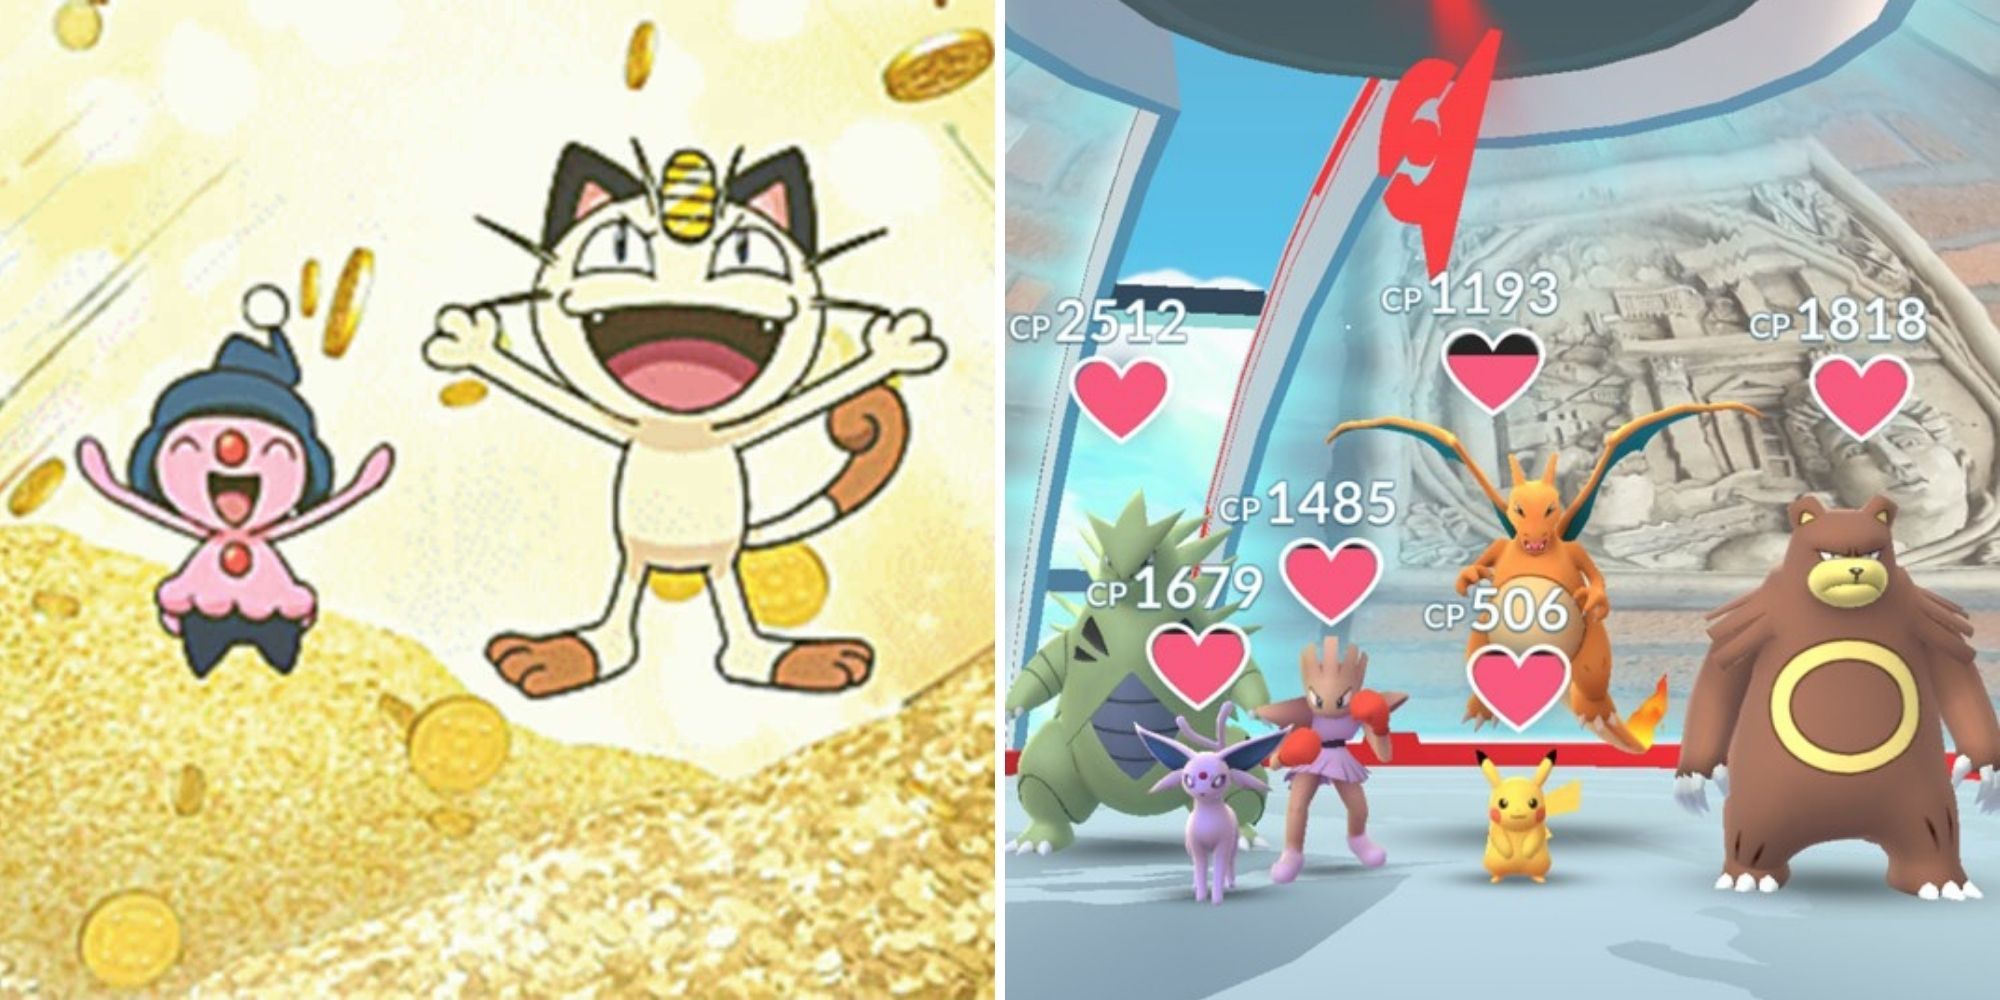 Pokemon Go Meowth In Pokecoin Pile (kiwa), Gym With Pokemon In It (tengen)